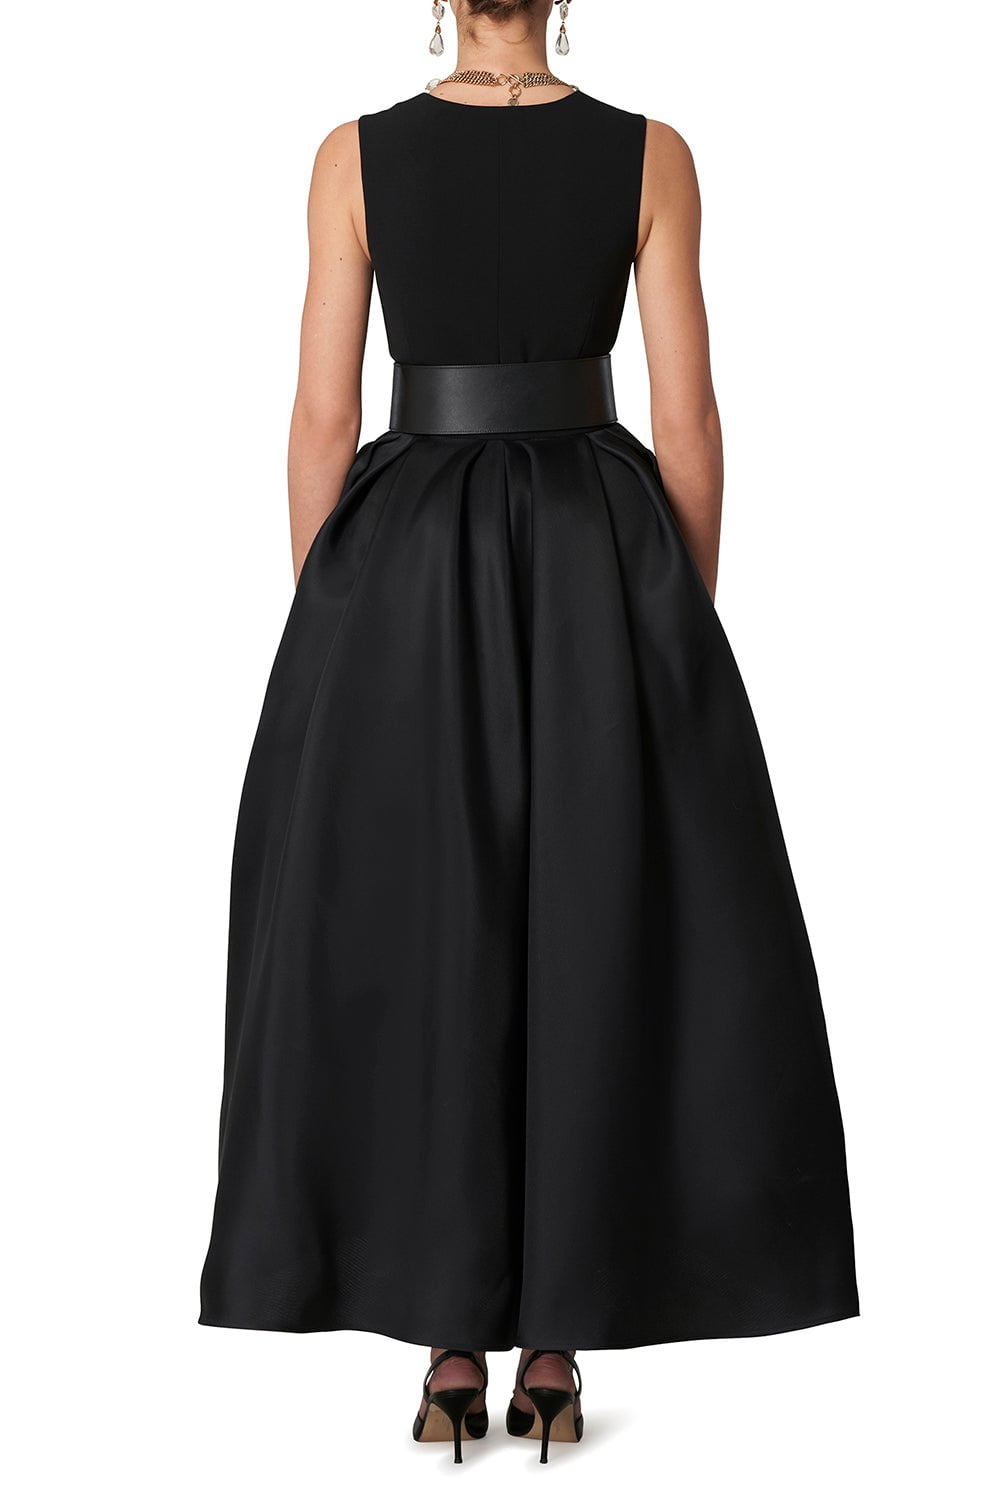 CAROLINA HERRERA-Sleeveless Overskirt Column Dress-BLACK